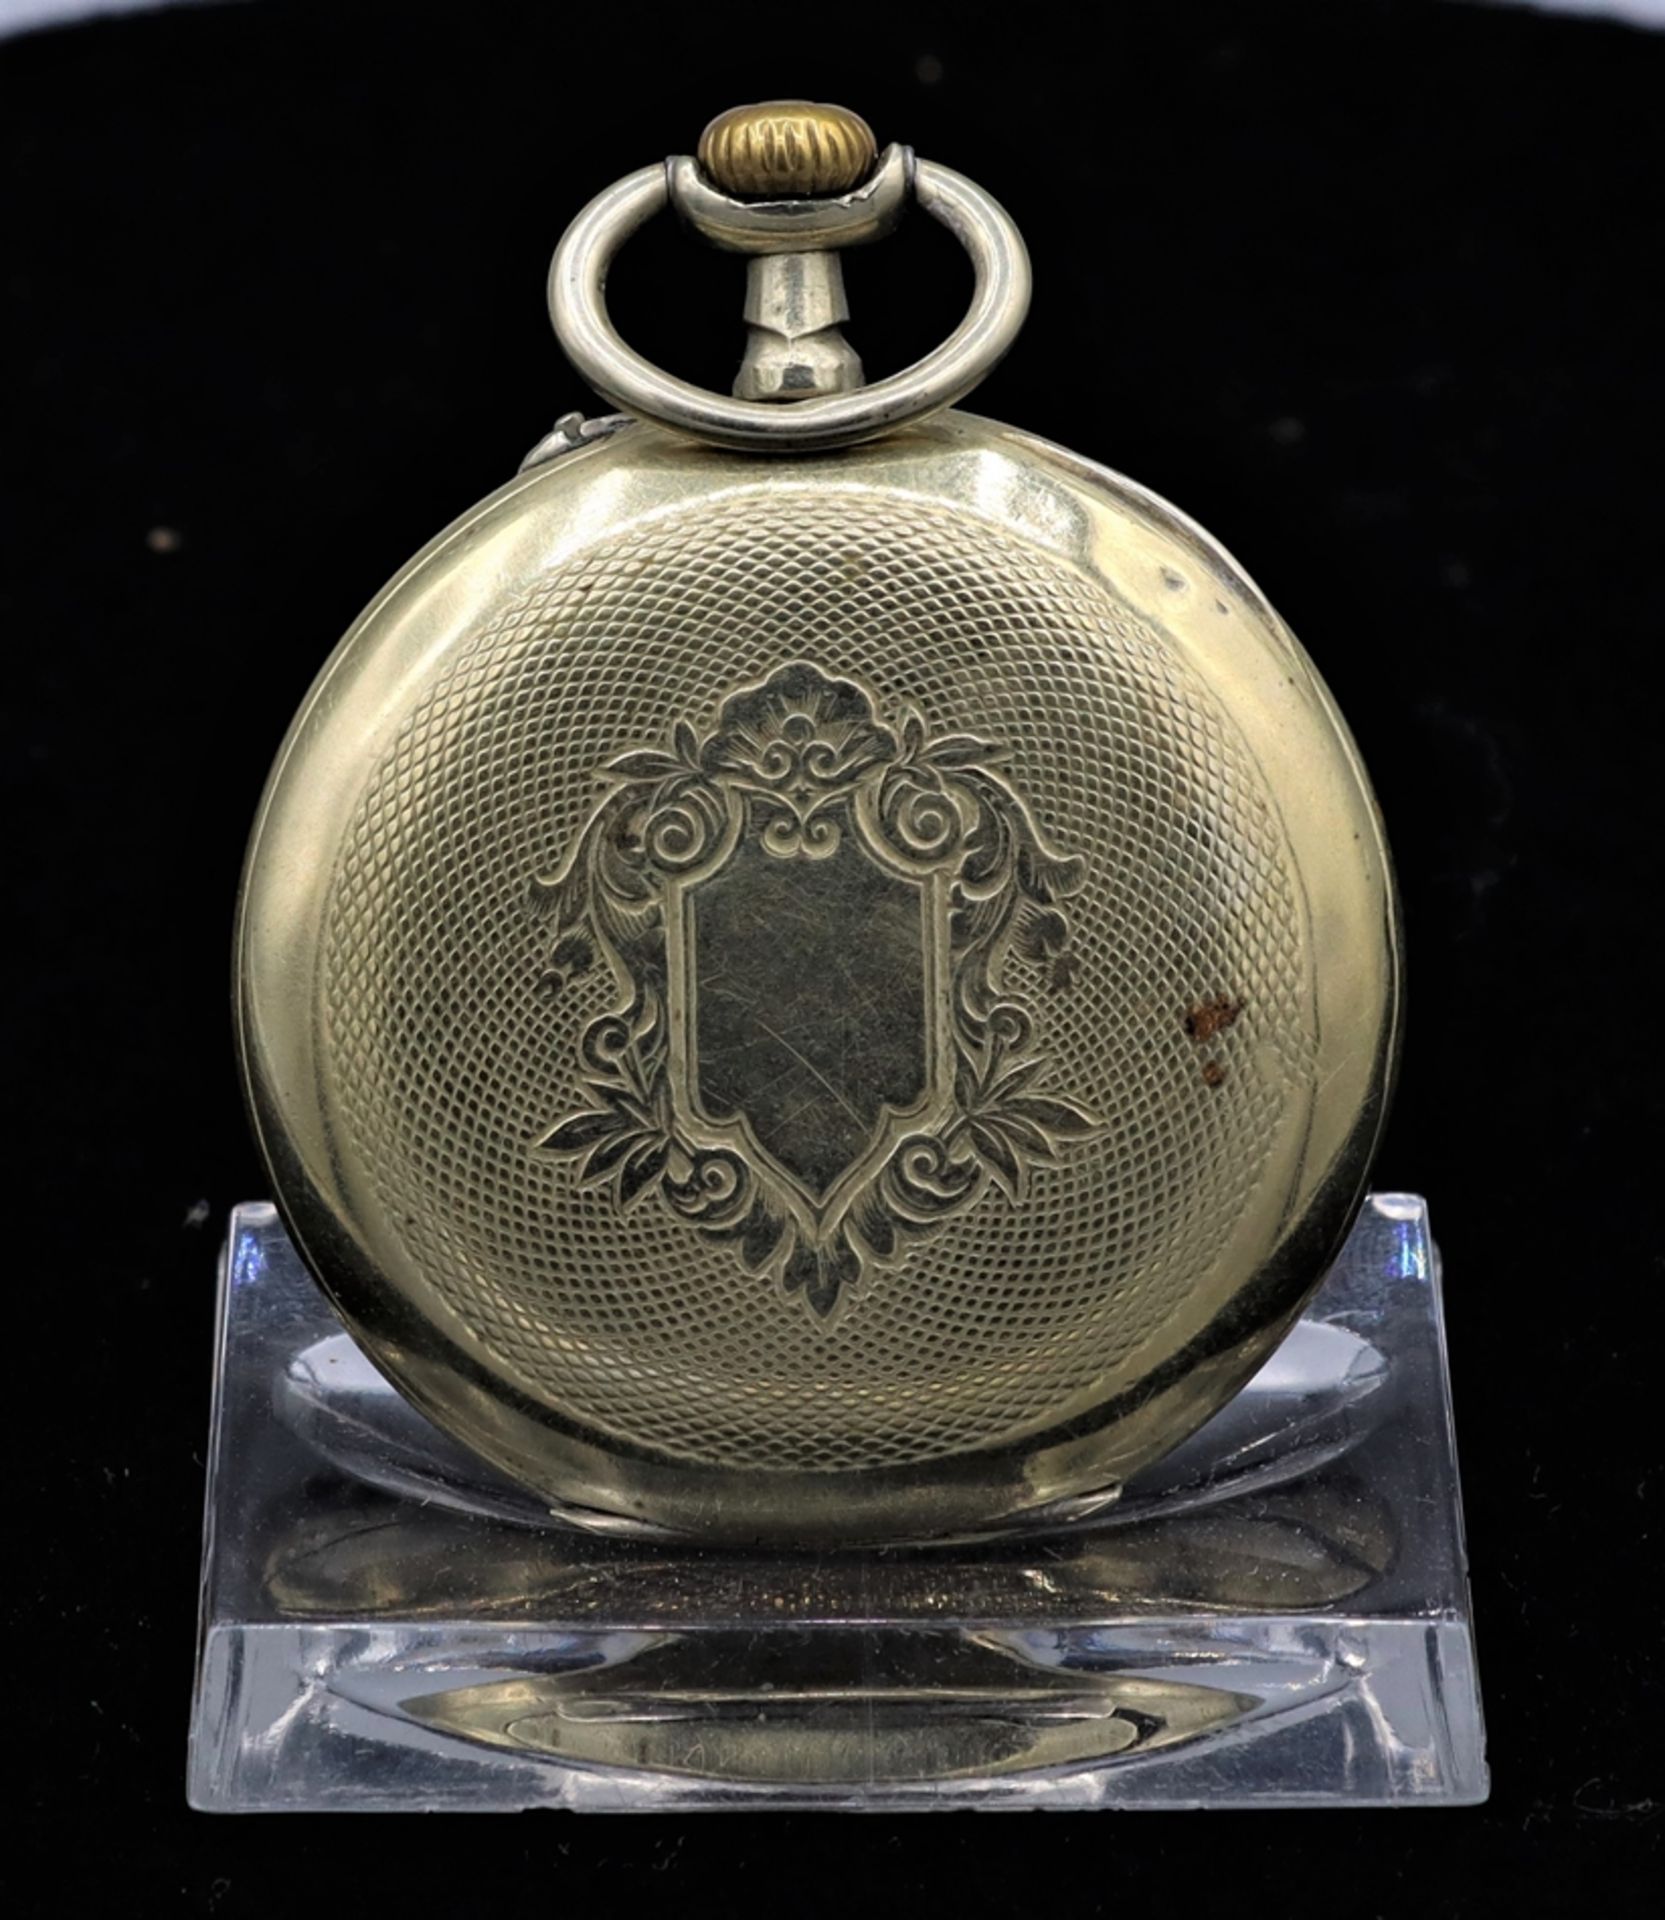 Herman's pocket watch Historicism circa 1890, German - Image 2 of 2